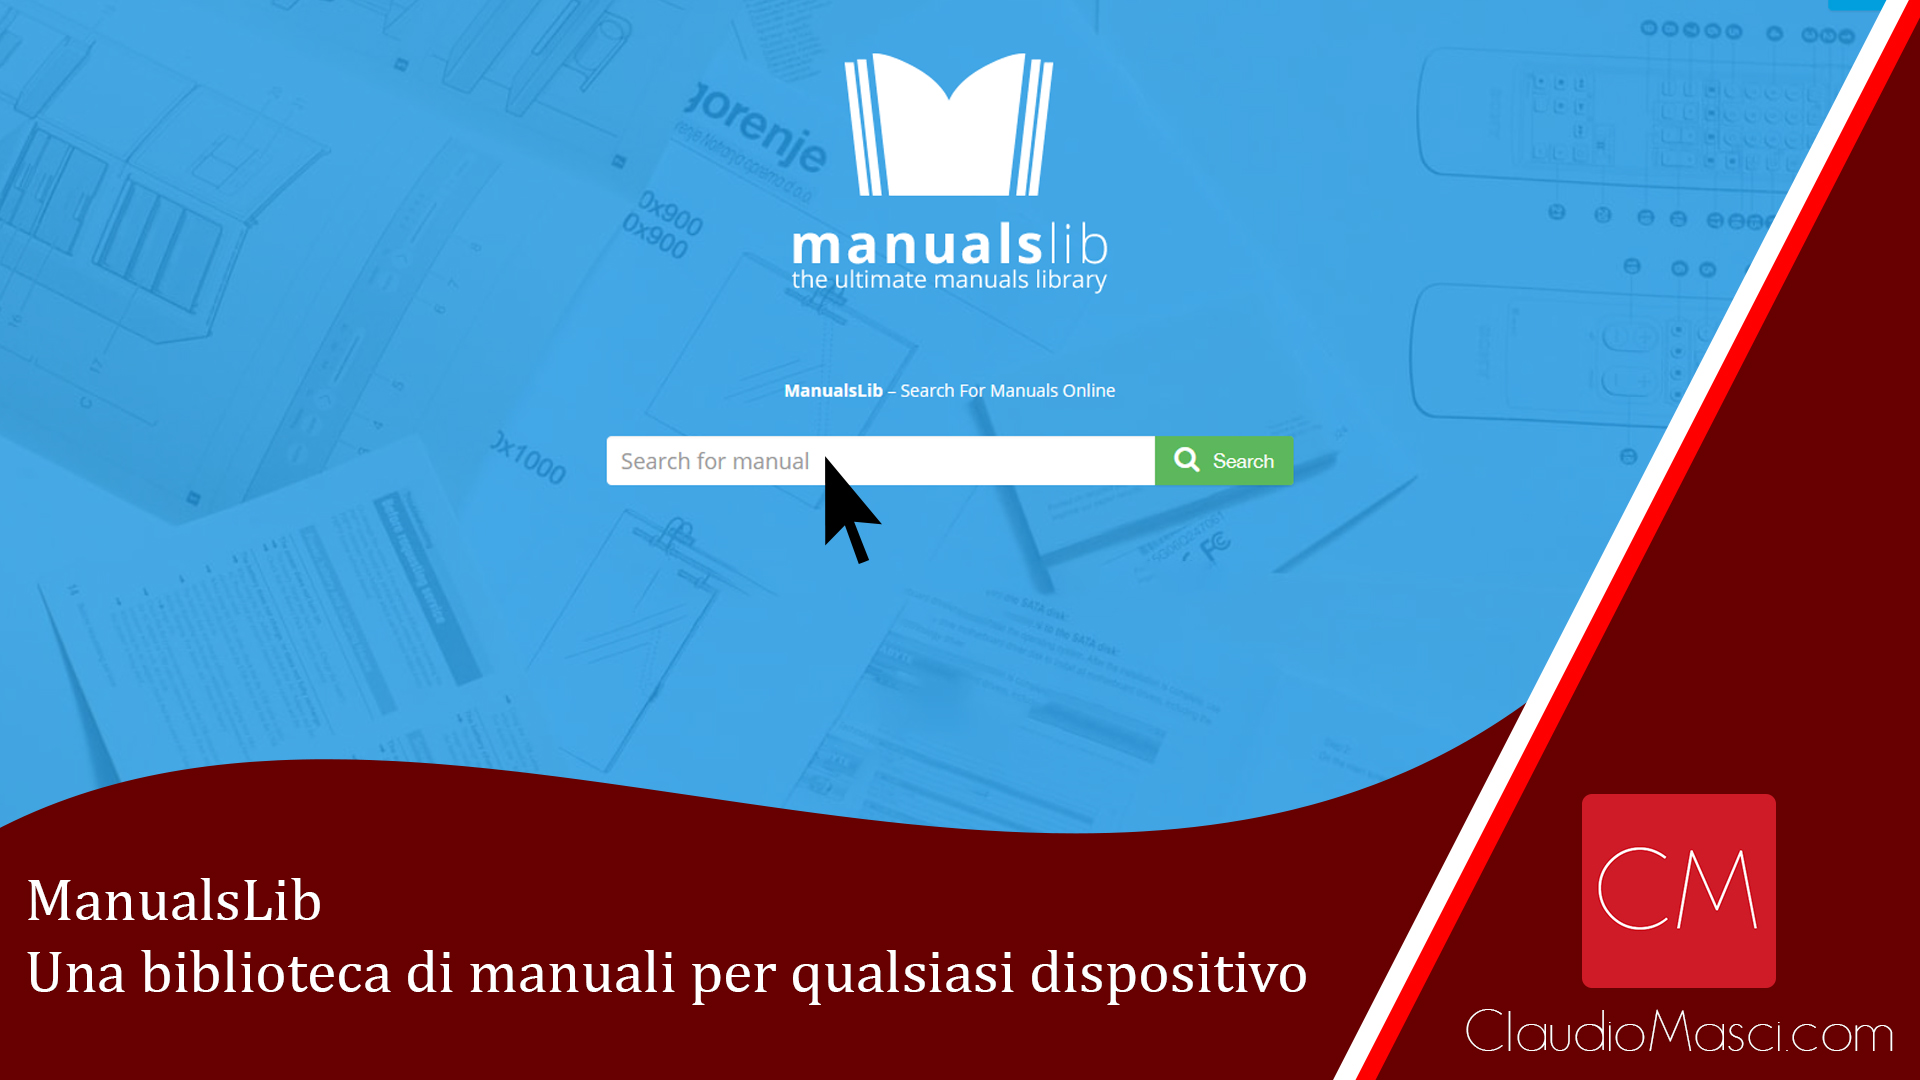 ManualsLib | Una biblioteca di manuali per qualsiasi dispositivo